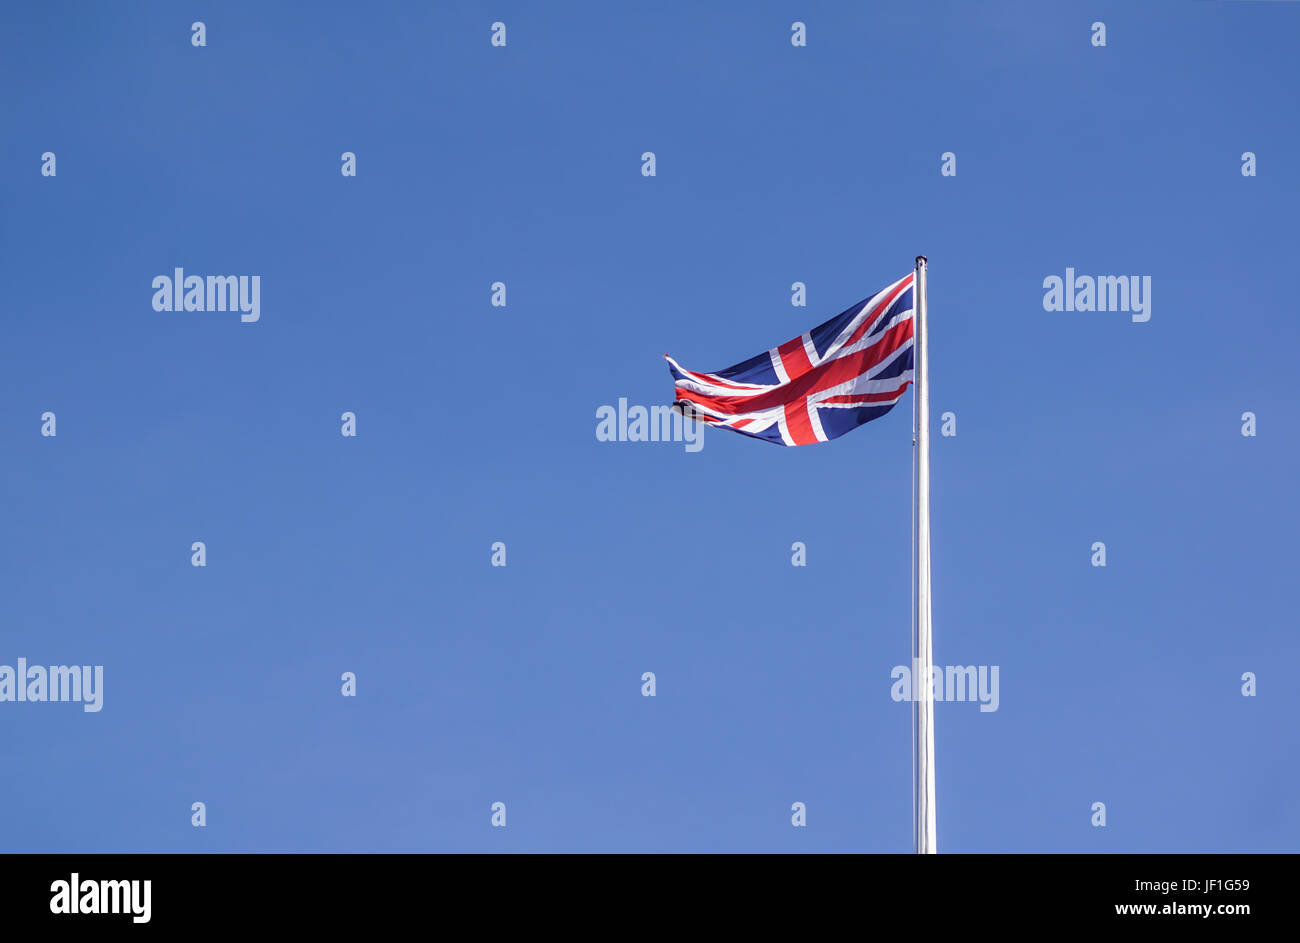 The Flag of the United Kingdom the Union Jack Stock Photo